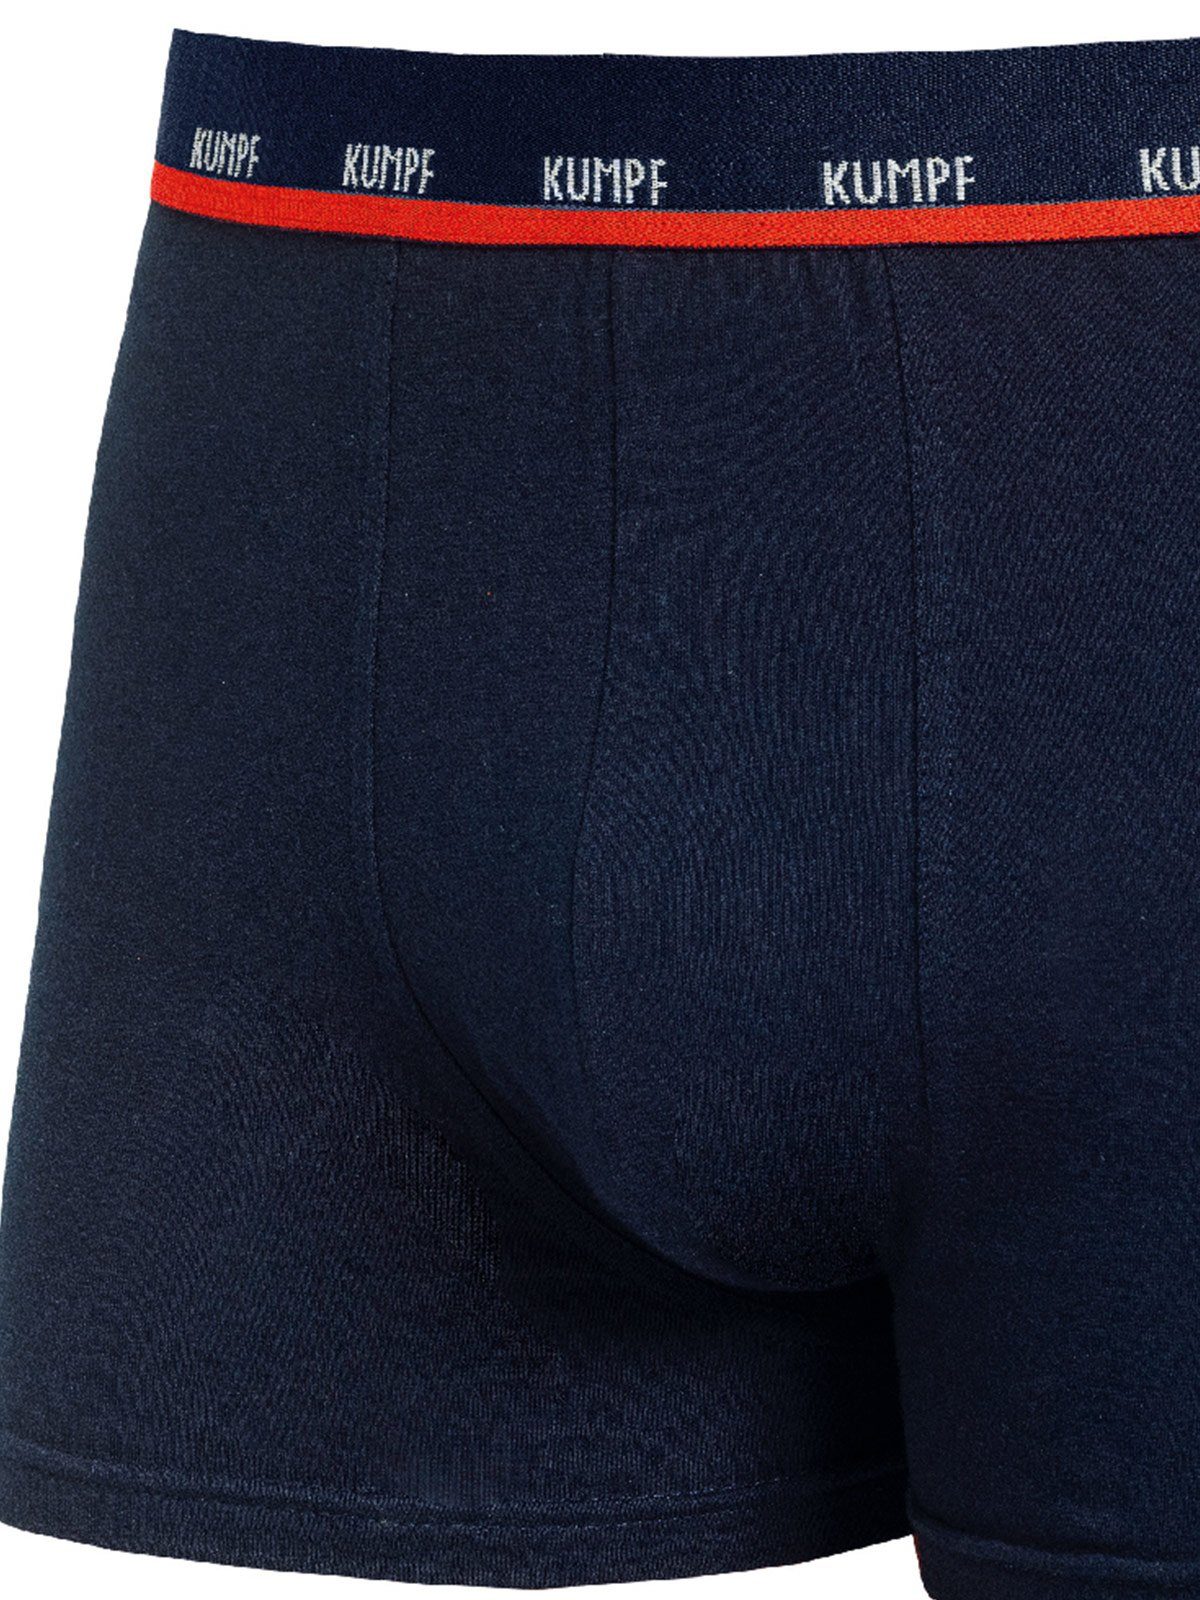 Herren 3-St) 3er Cotton Retro navy Pack Materialmix KUMPF Stretch Pants (Packung, Pants Gummibund mit